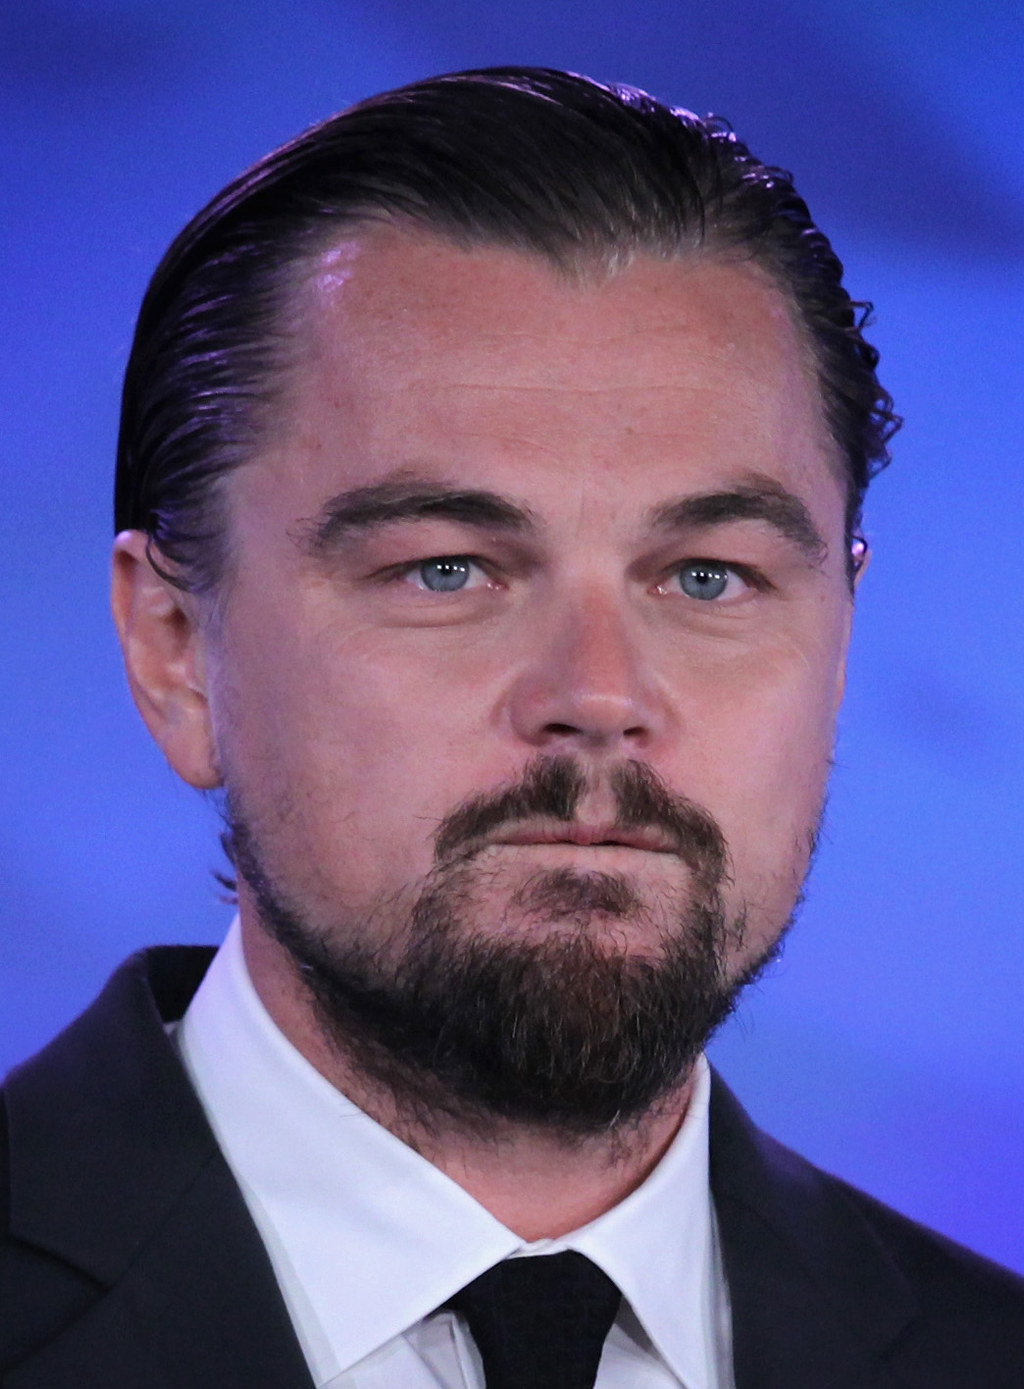 Leonardo DiCaprio's Beard Must Be Stopped